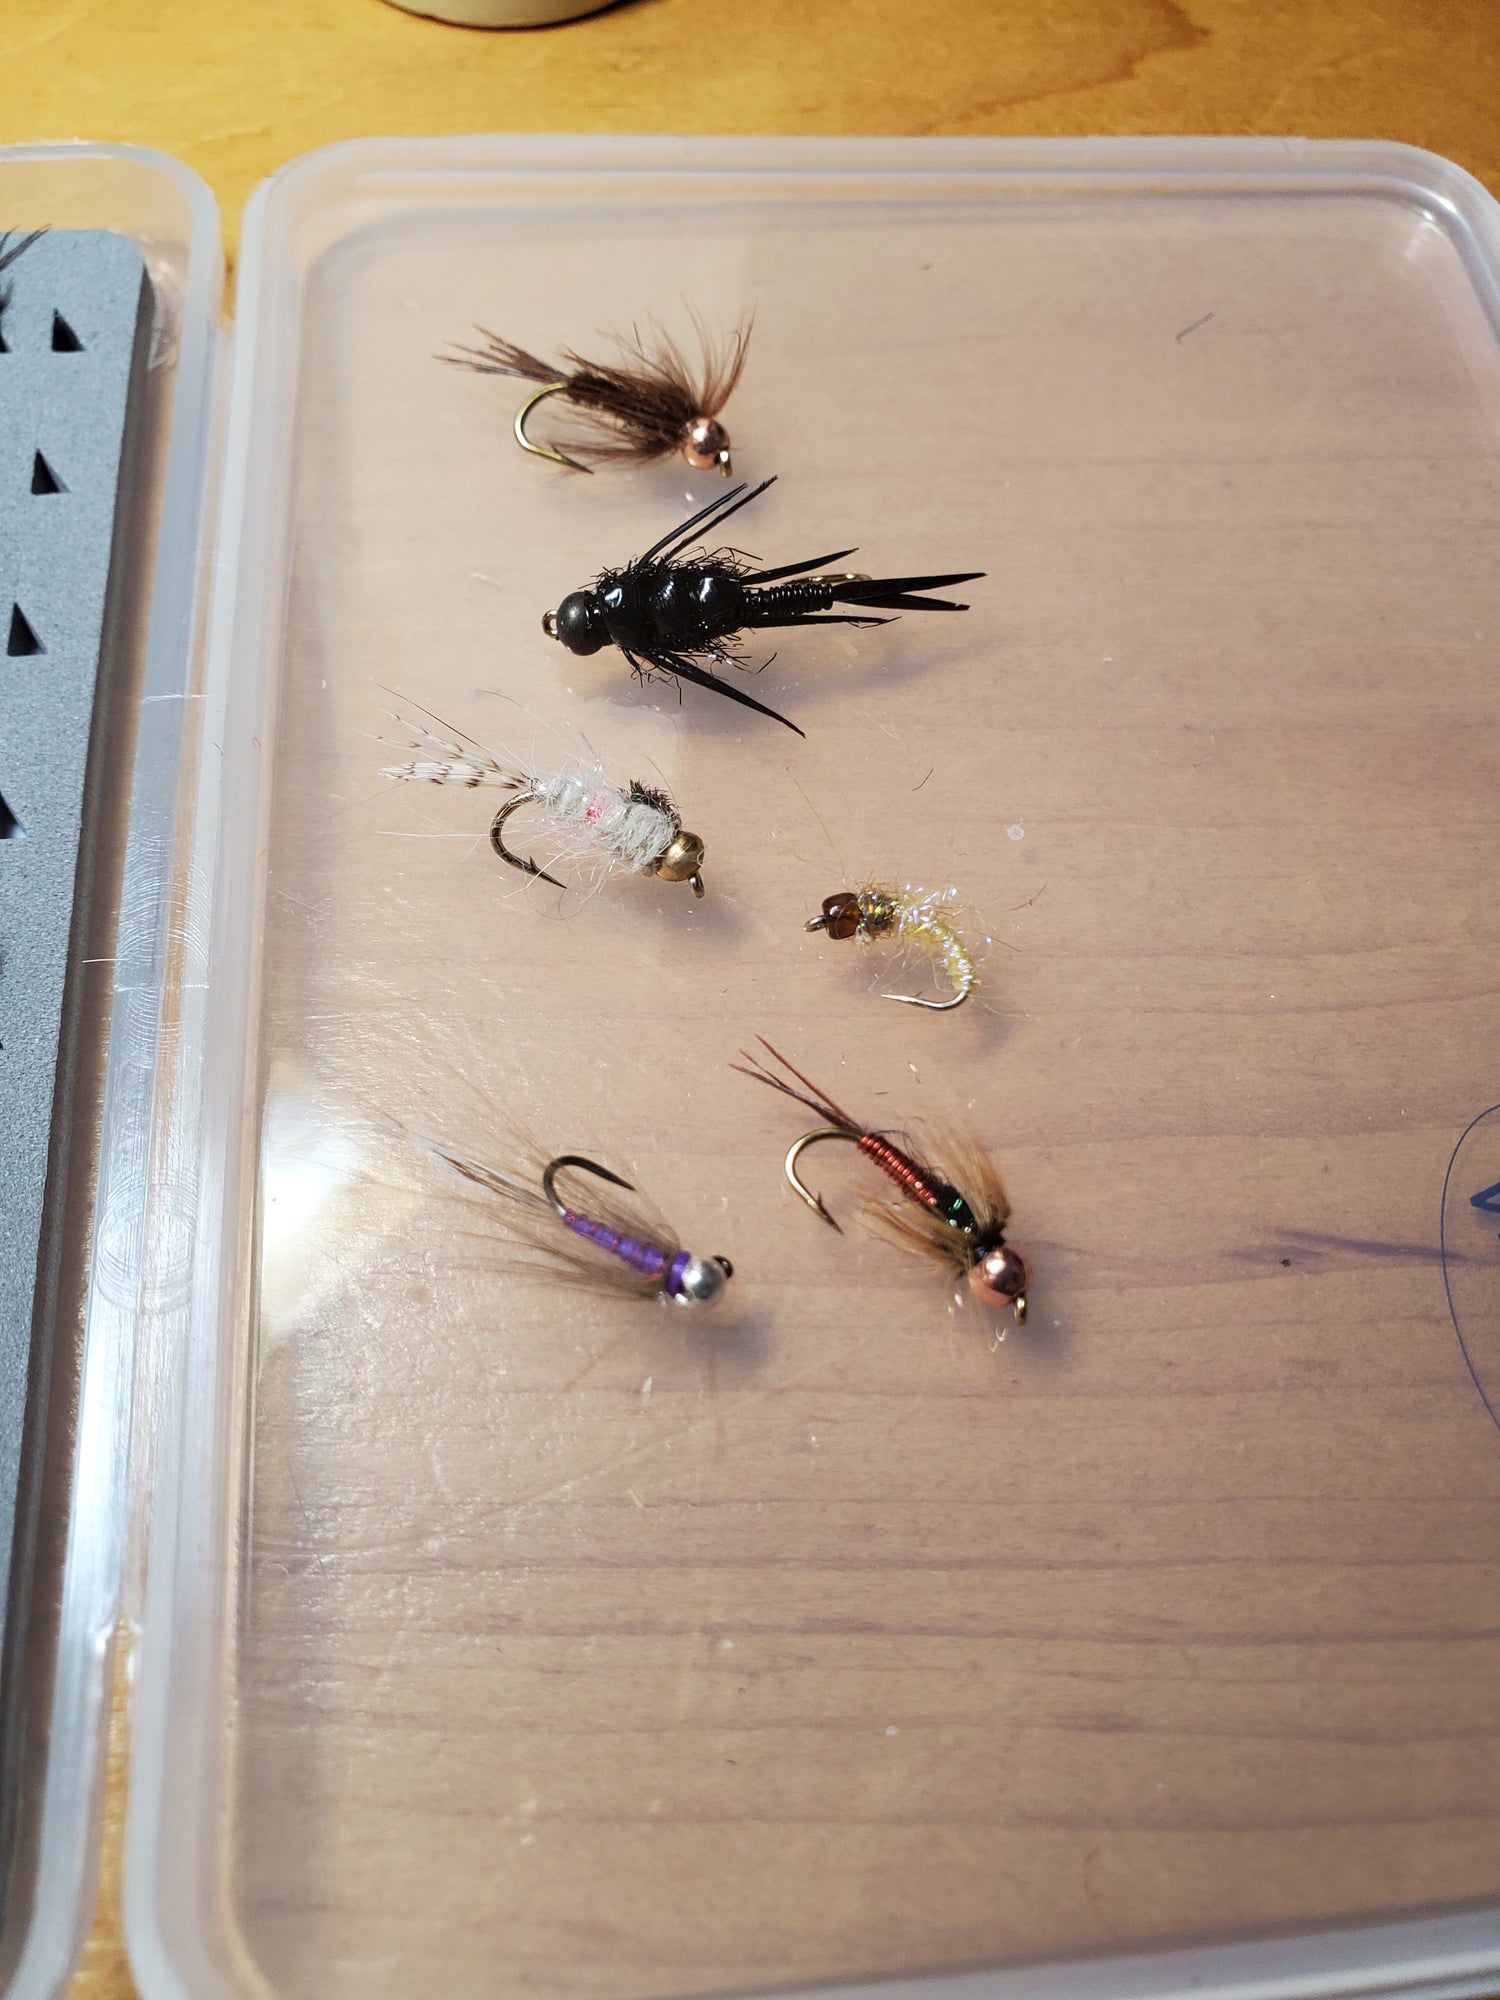 Beadhead Nymphs, Flies For Fly Fishing